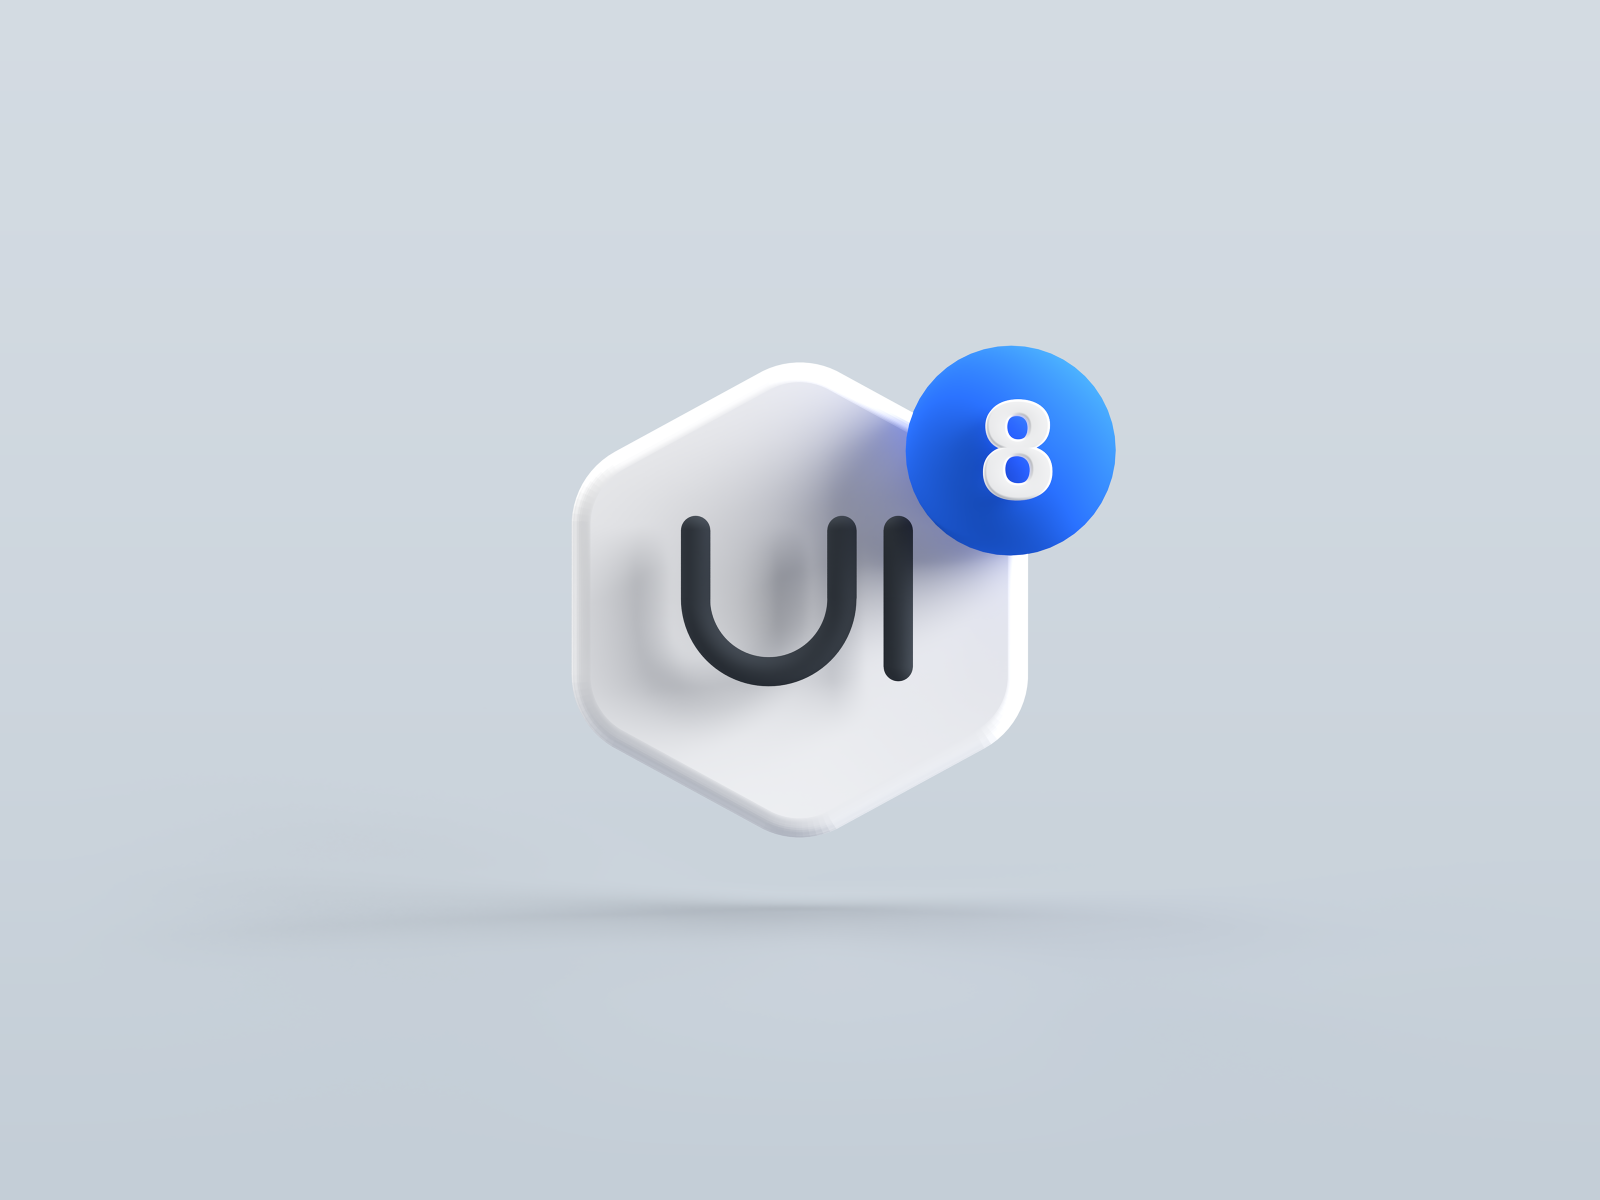 UI8 3D Icon for Mac OS Big Sur application apple icon app icon 3d illustration illustration icon design render wallpaper ui icon design mac os icon user interface ui icon design 3d design big sur mac os 3d icon 3d ui8